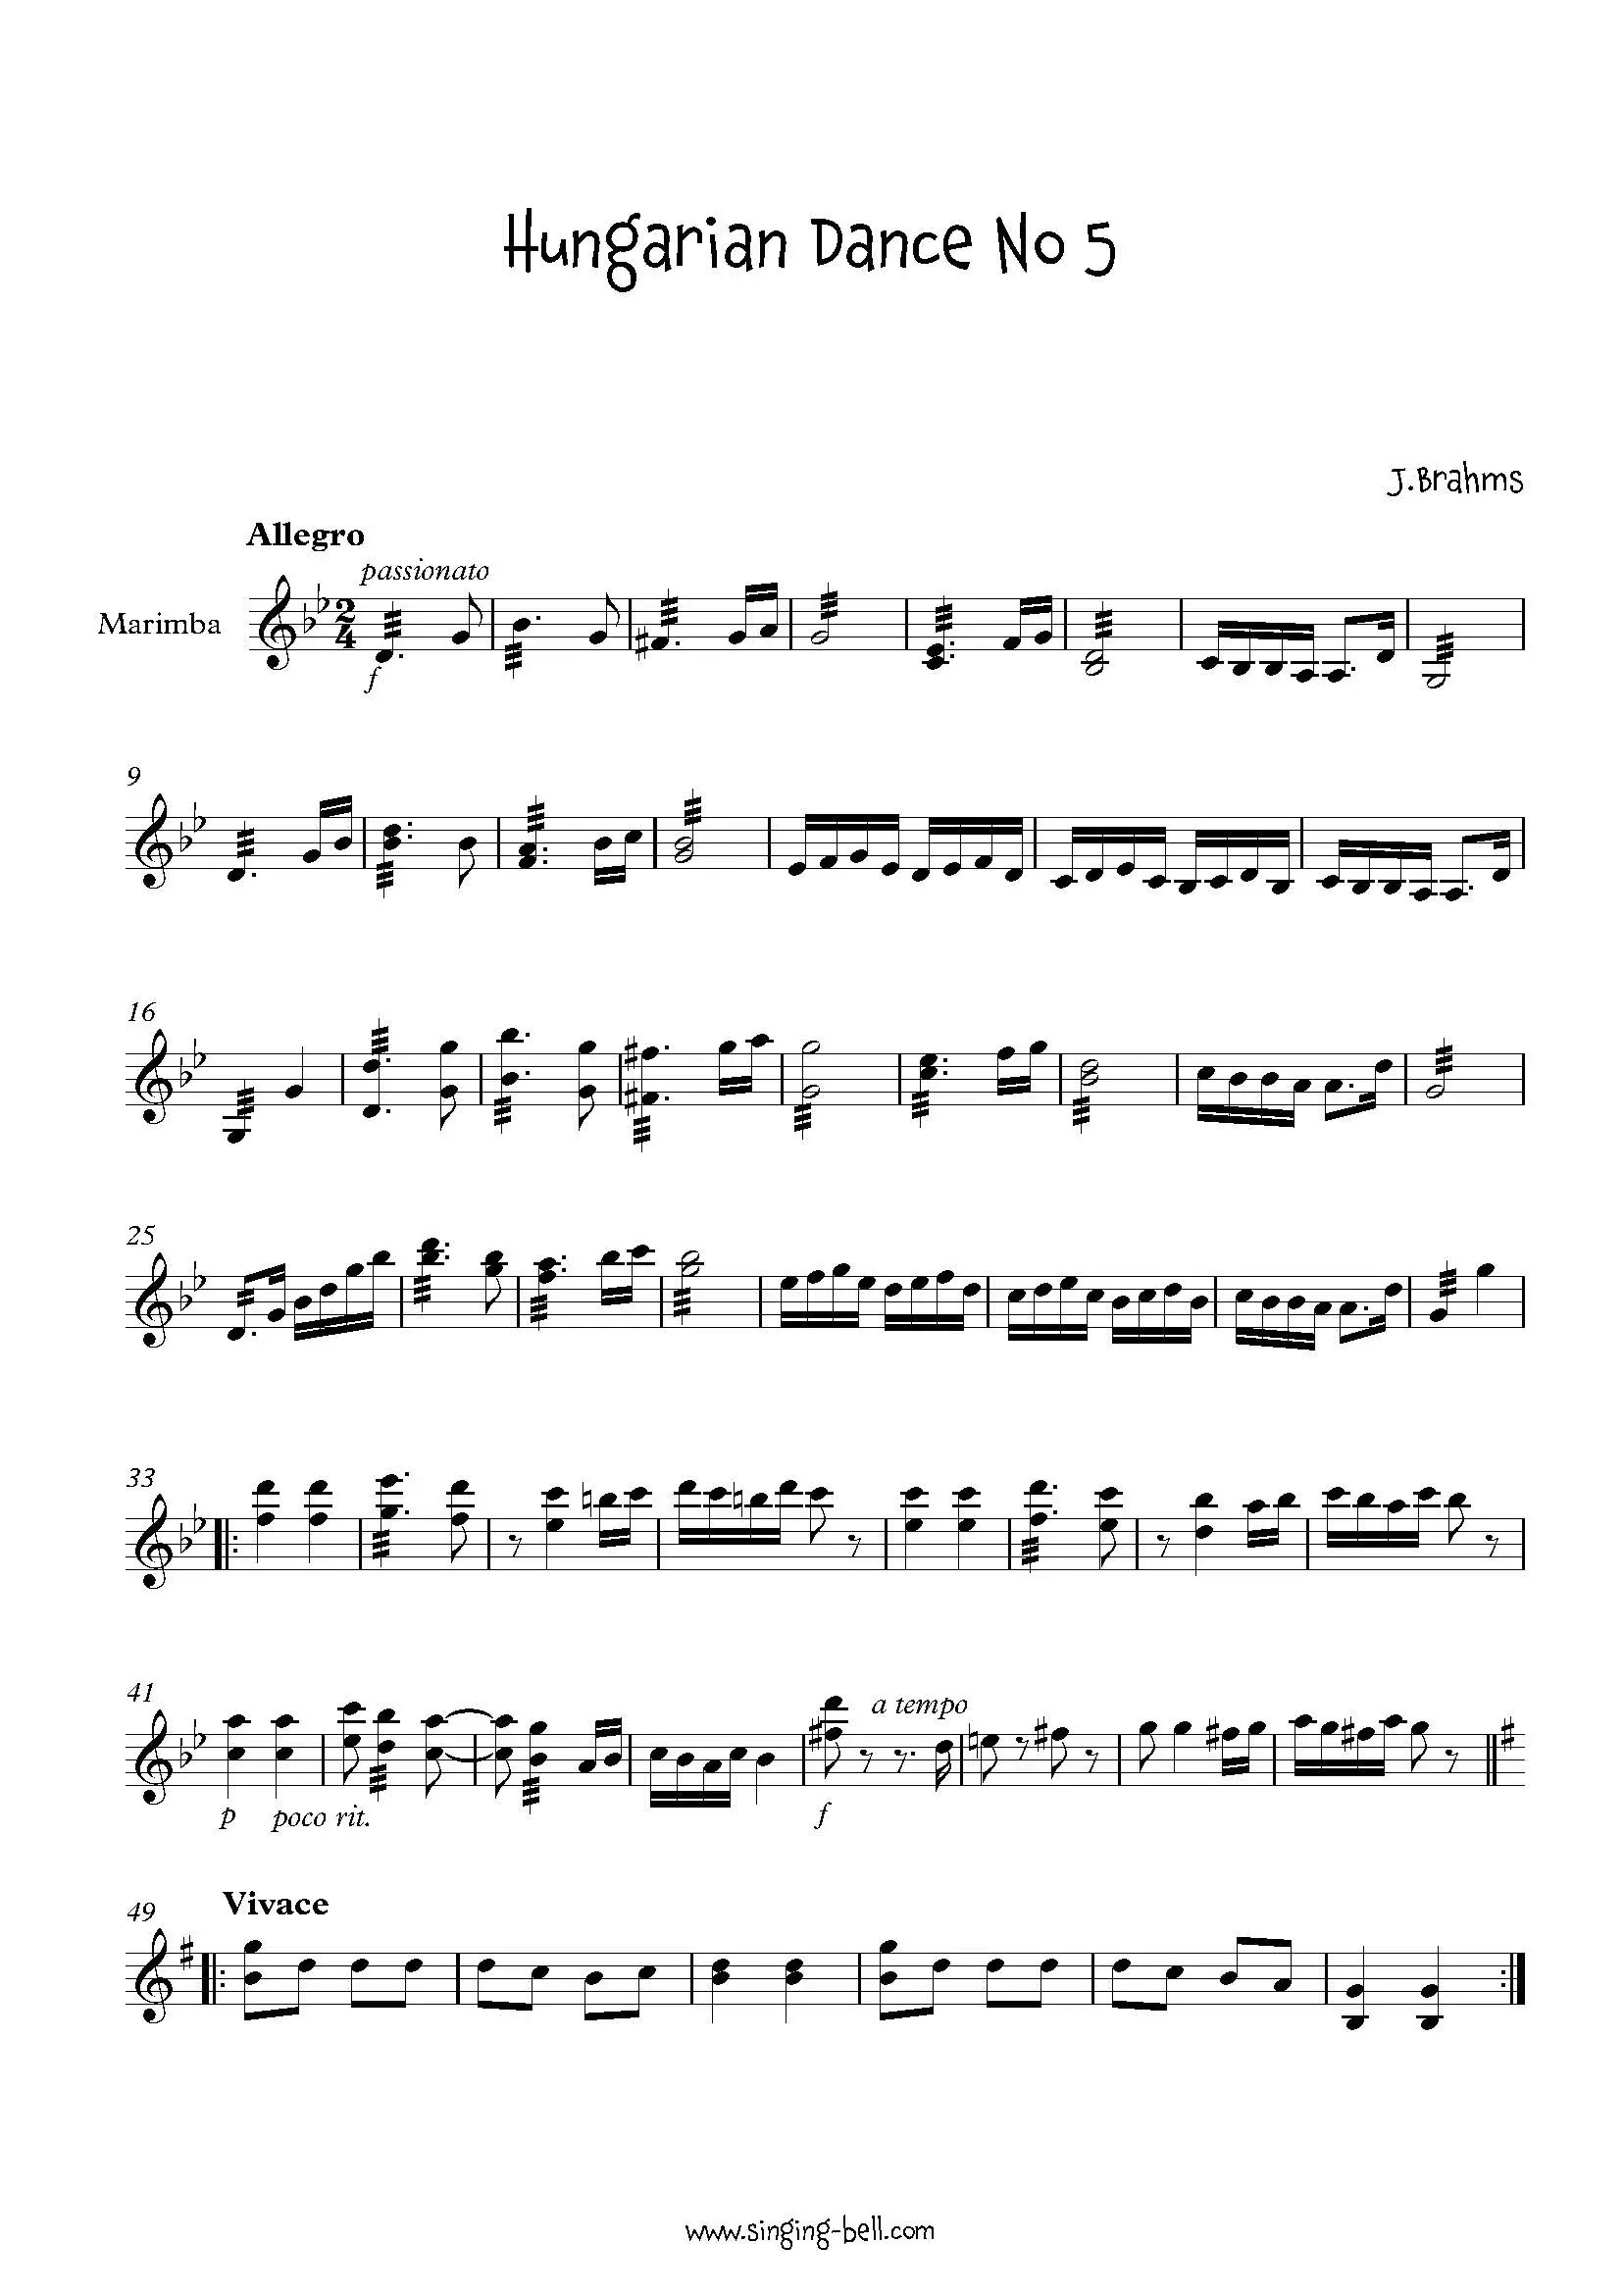 Hungarian_Dance_No_5-marimba-sheet-music-singing-bell_Page_1